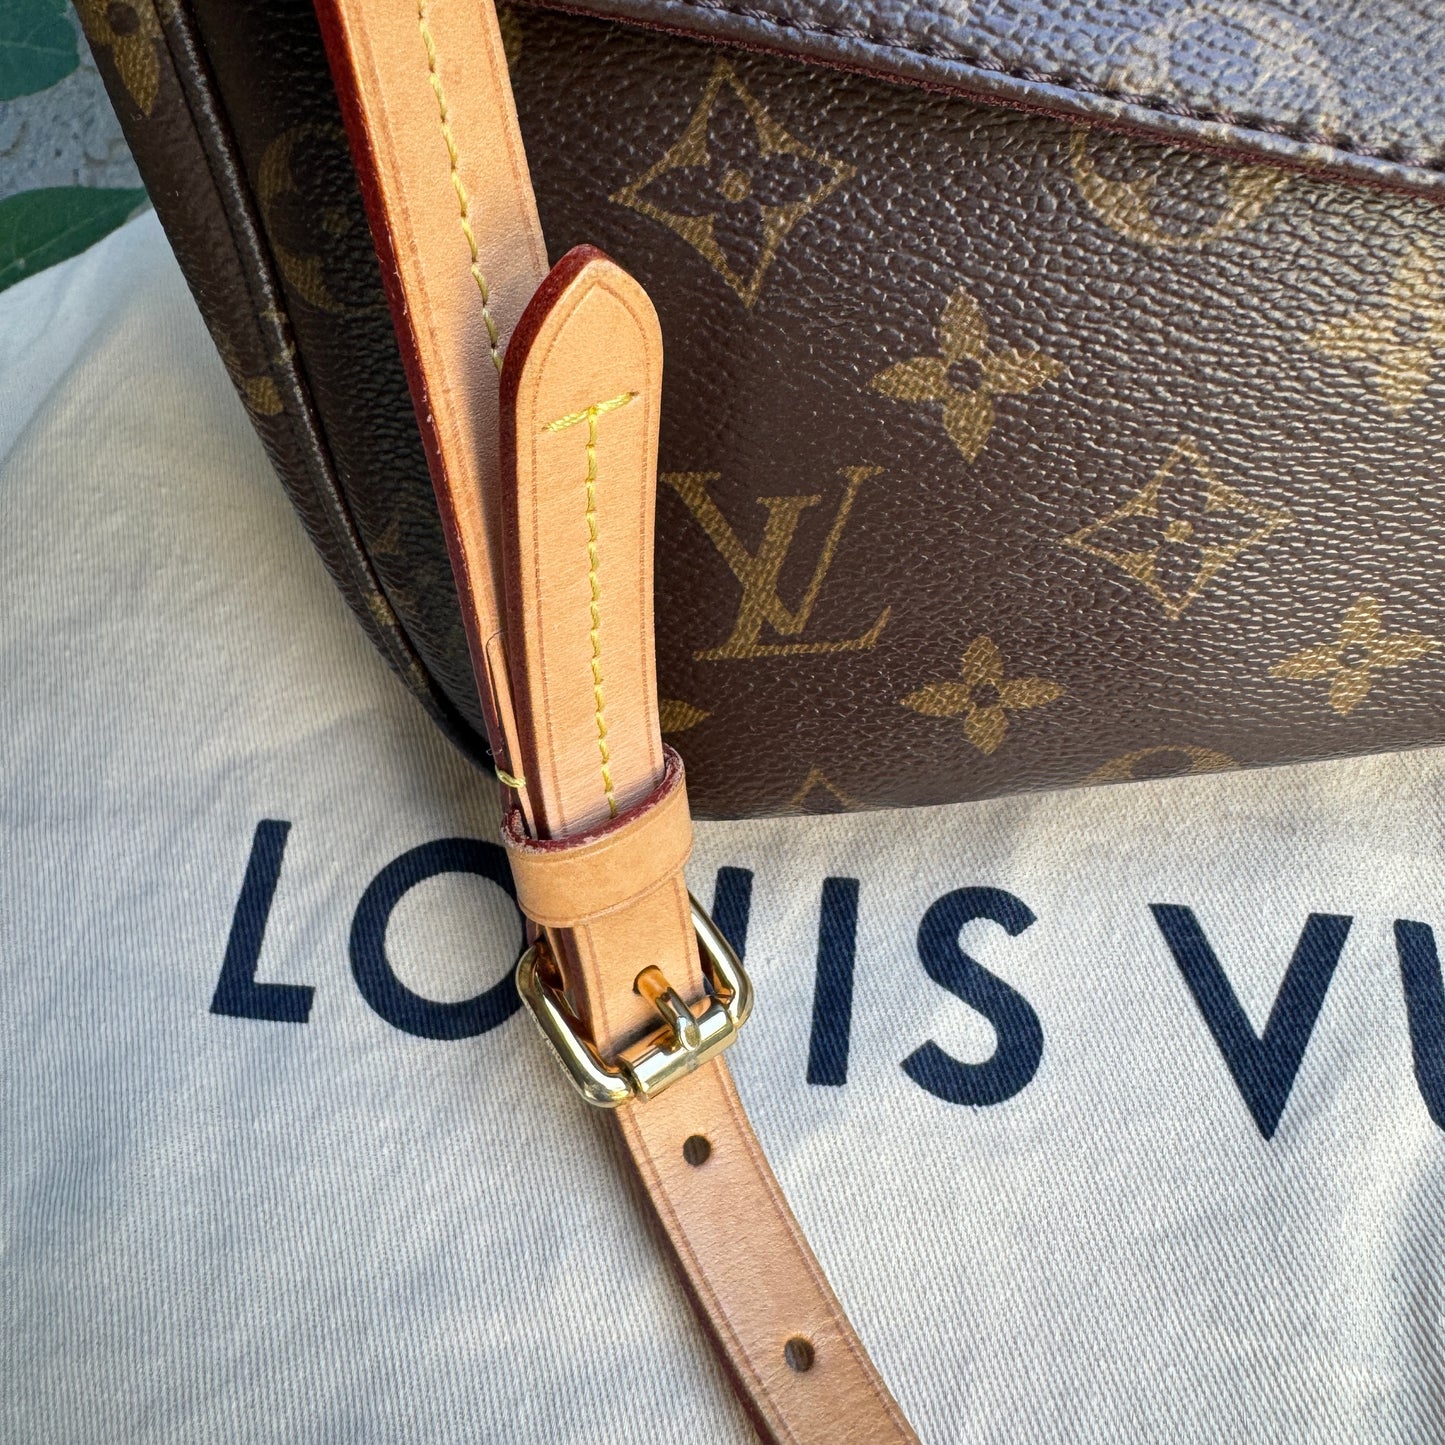 Louis Vuitton Monogram Mabillon Crossbody